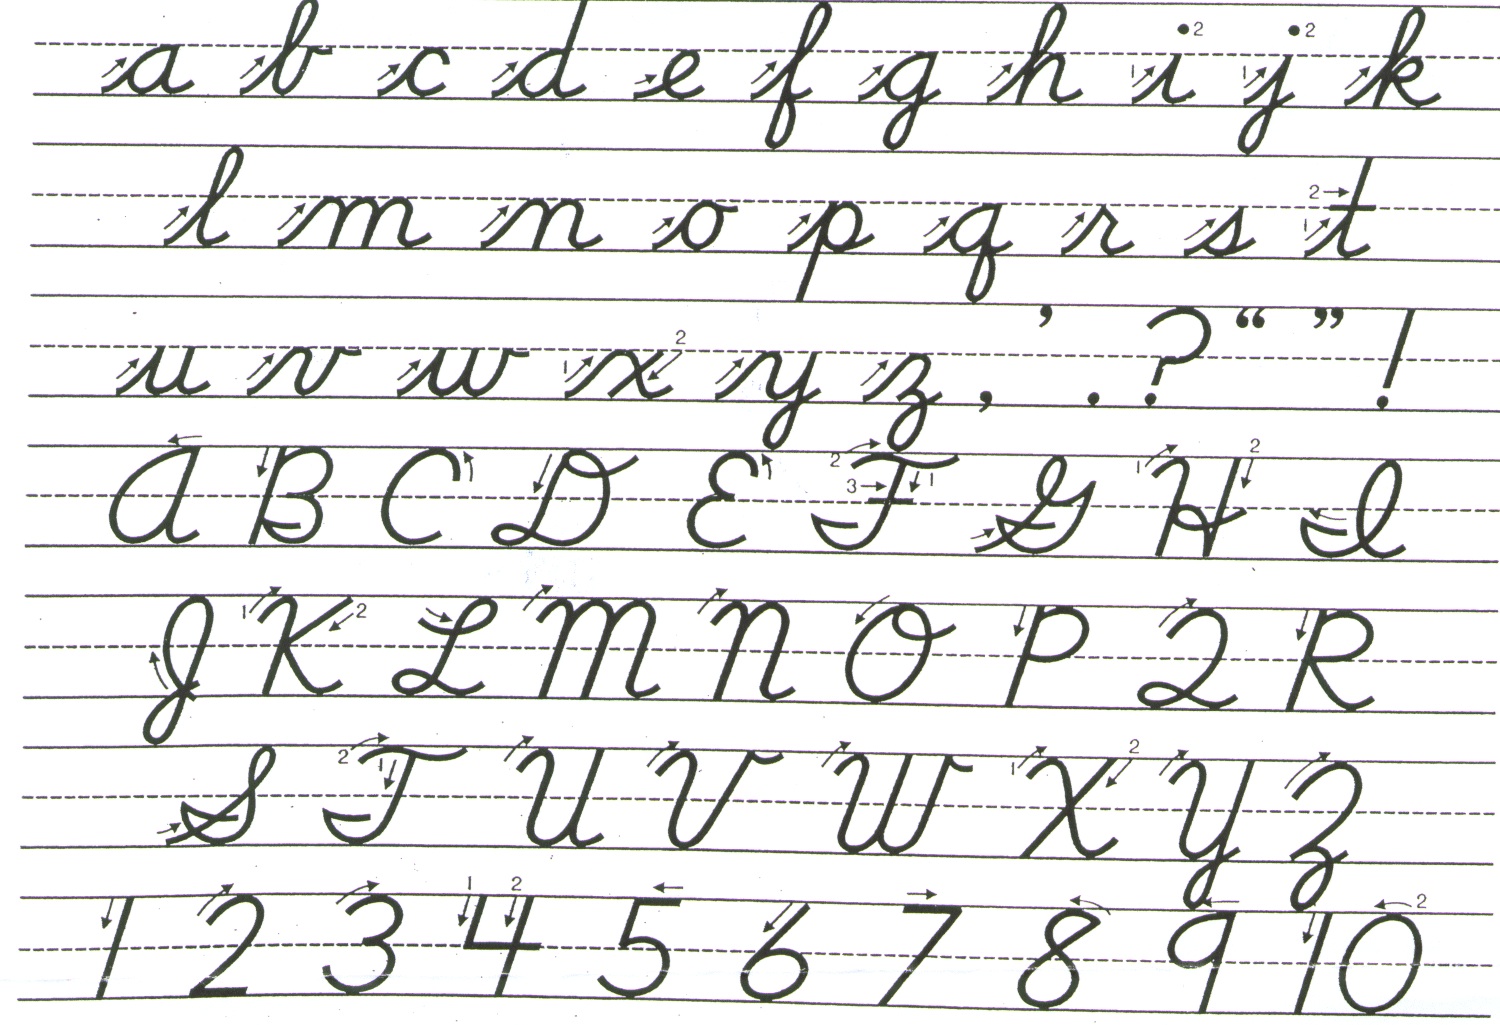 http://lumaol.files.wordpress.com/2012/01/how_to_write_in_cursive.jpg